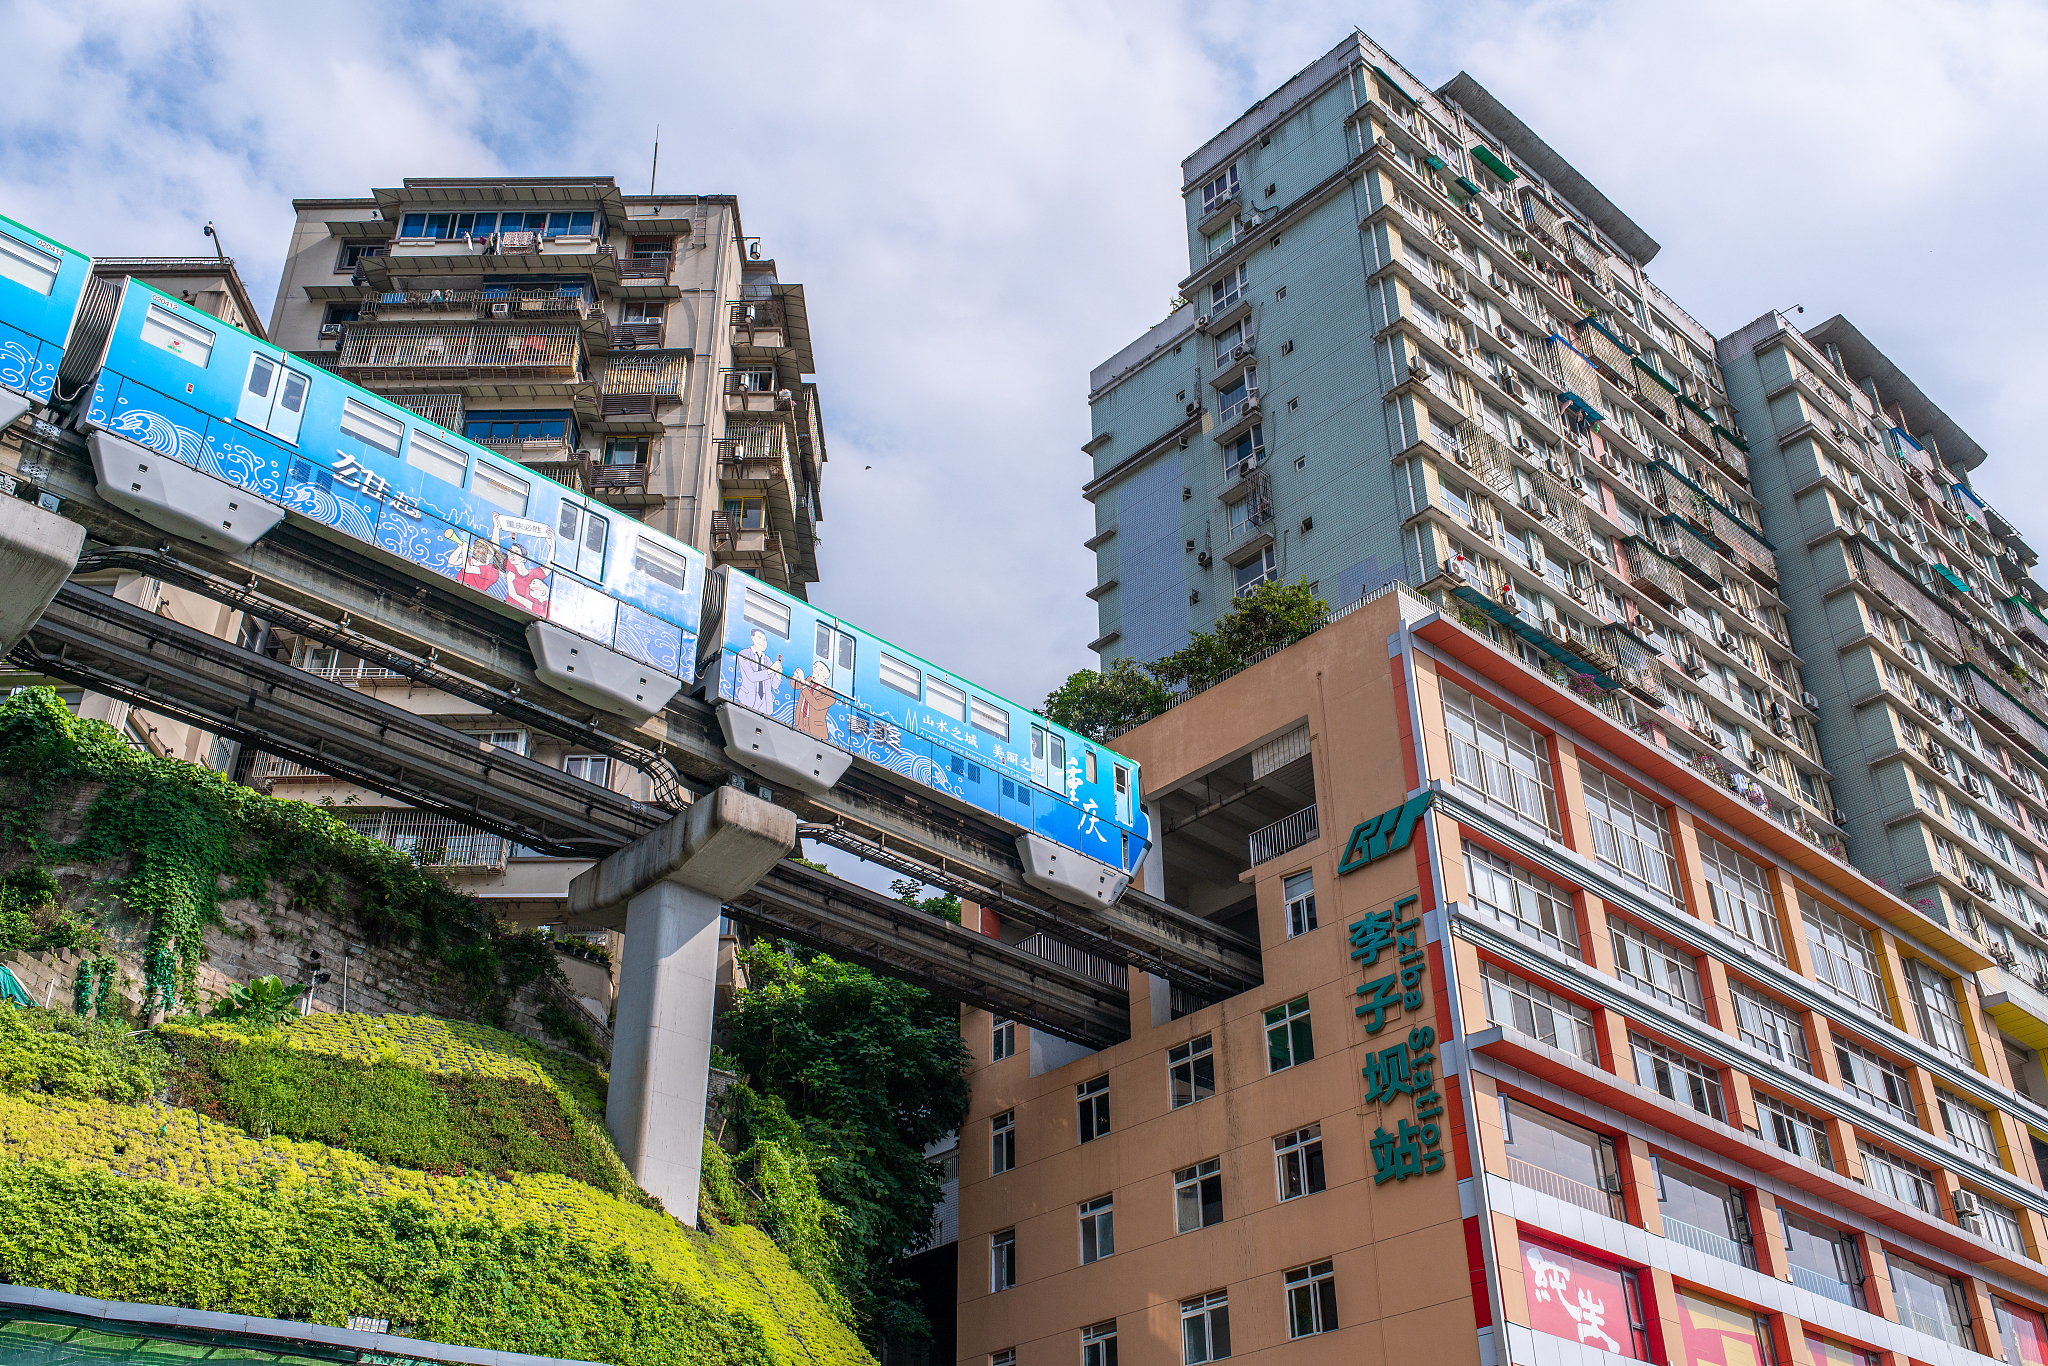 Experiencing the magic of Chongqing's transportation 